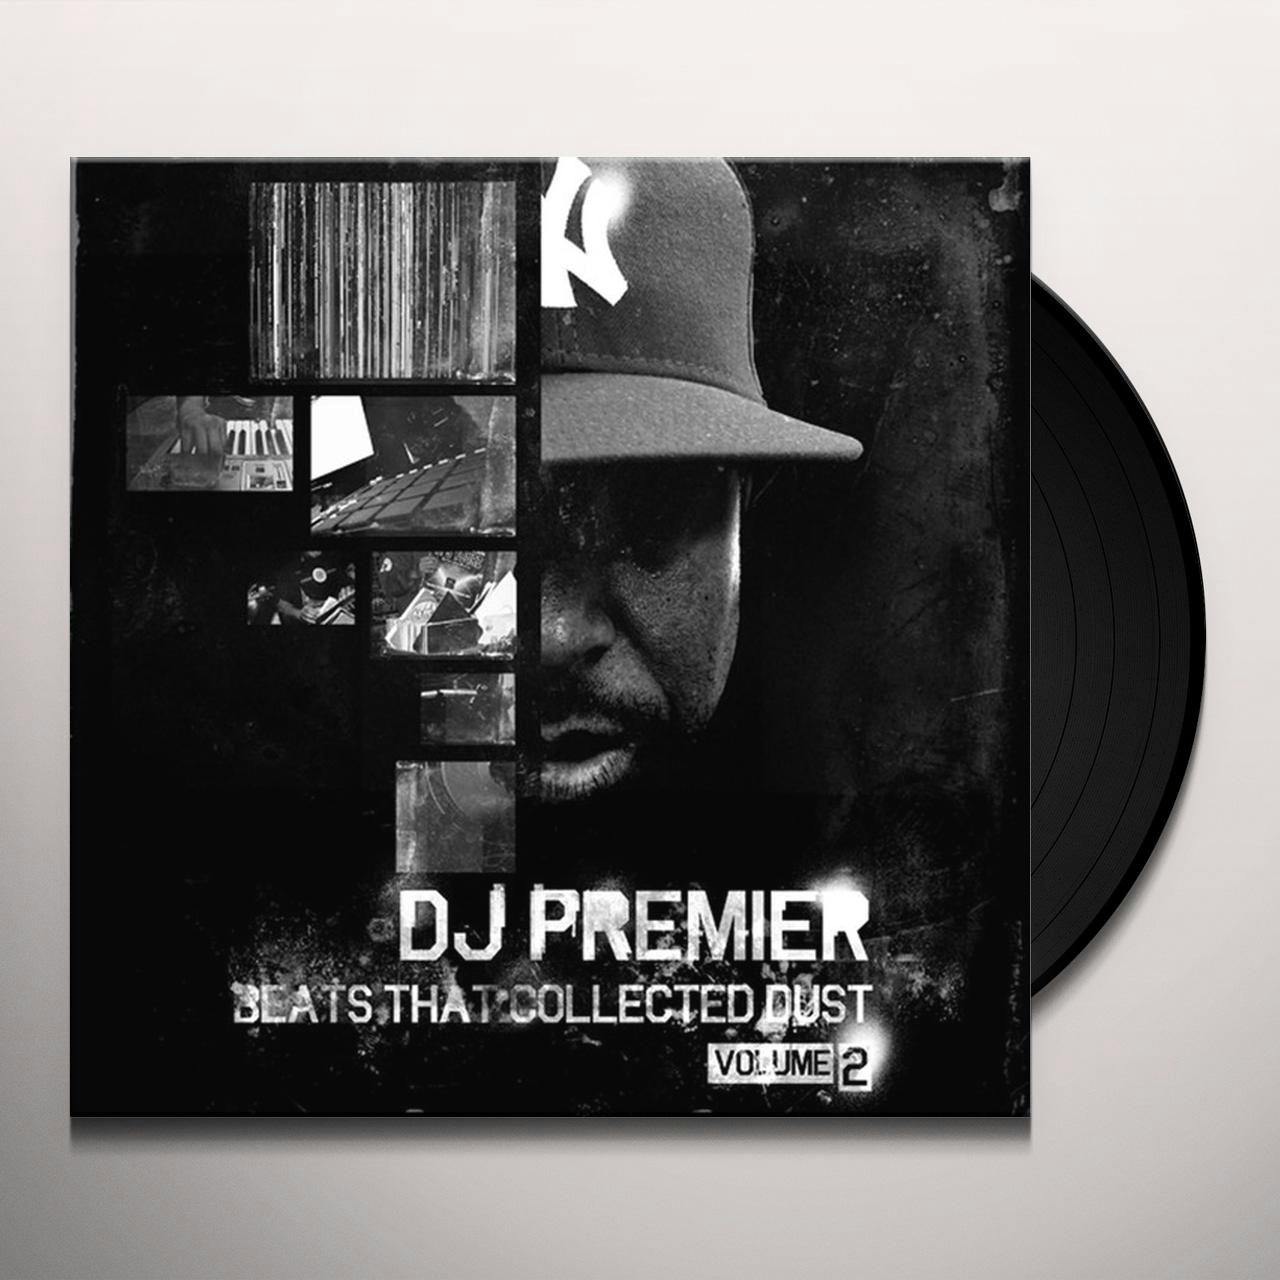 DJ Premier VOL. 2-BEATS THAT COLLECTED DUST Vinyl Record - Sweden